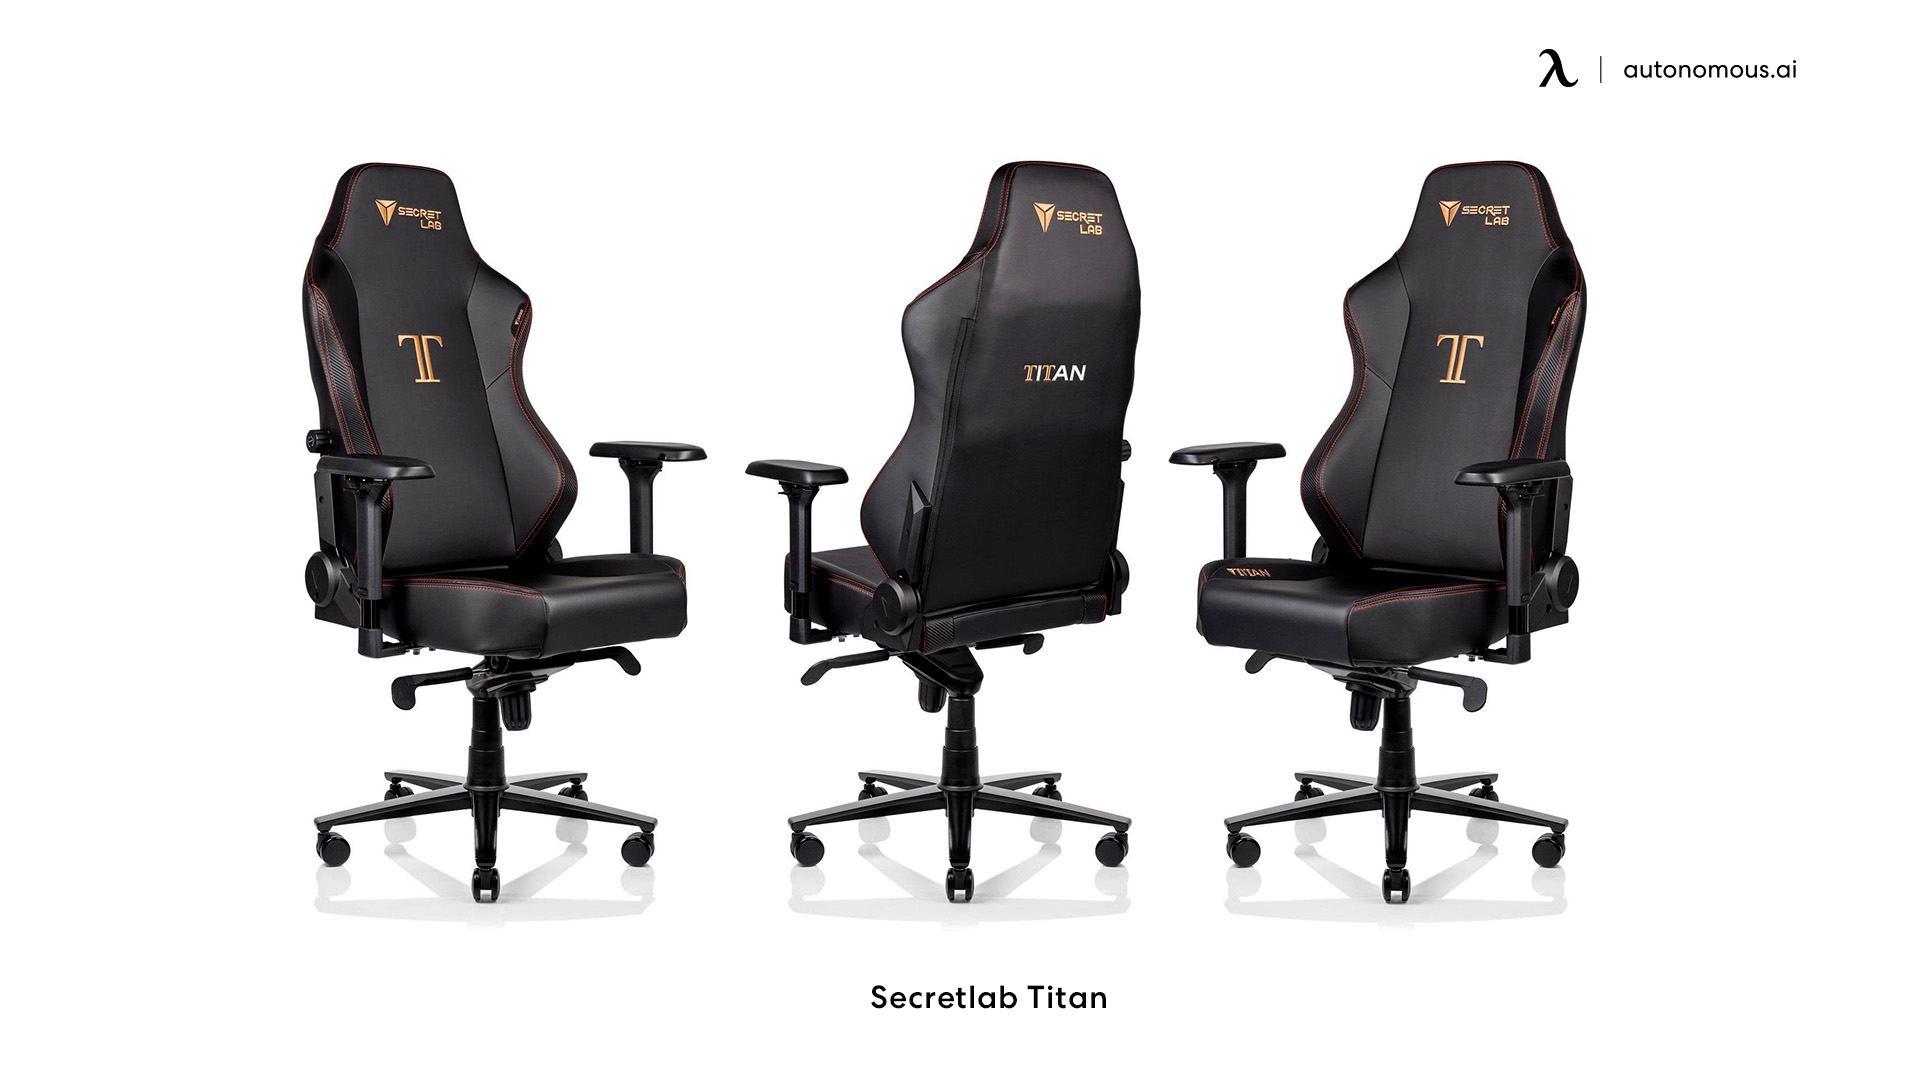 SecretLab Titan XL comfortable gaming chair